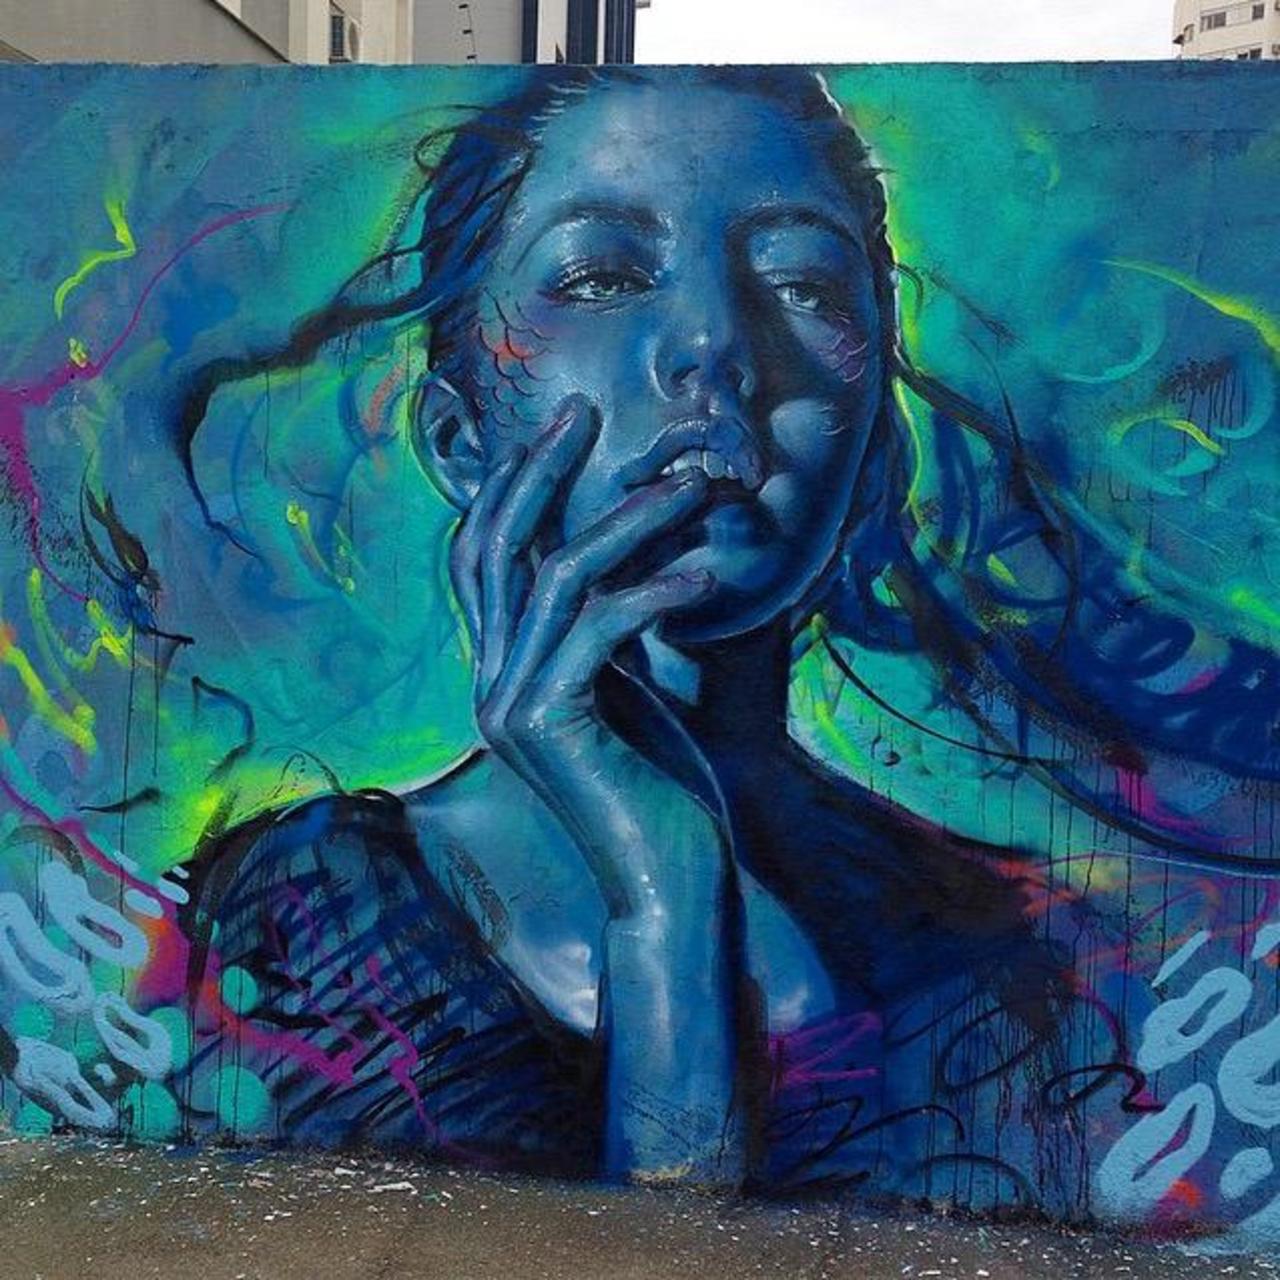 Thiago Valdi new Street Art piece titled 'Day Dreamer' #art #mural #graffiti #streetart http://t.co/3UodbQm48I …… http://twitter.com/charlesjackso14/status/652728506552557568